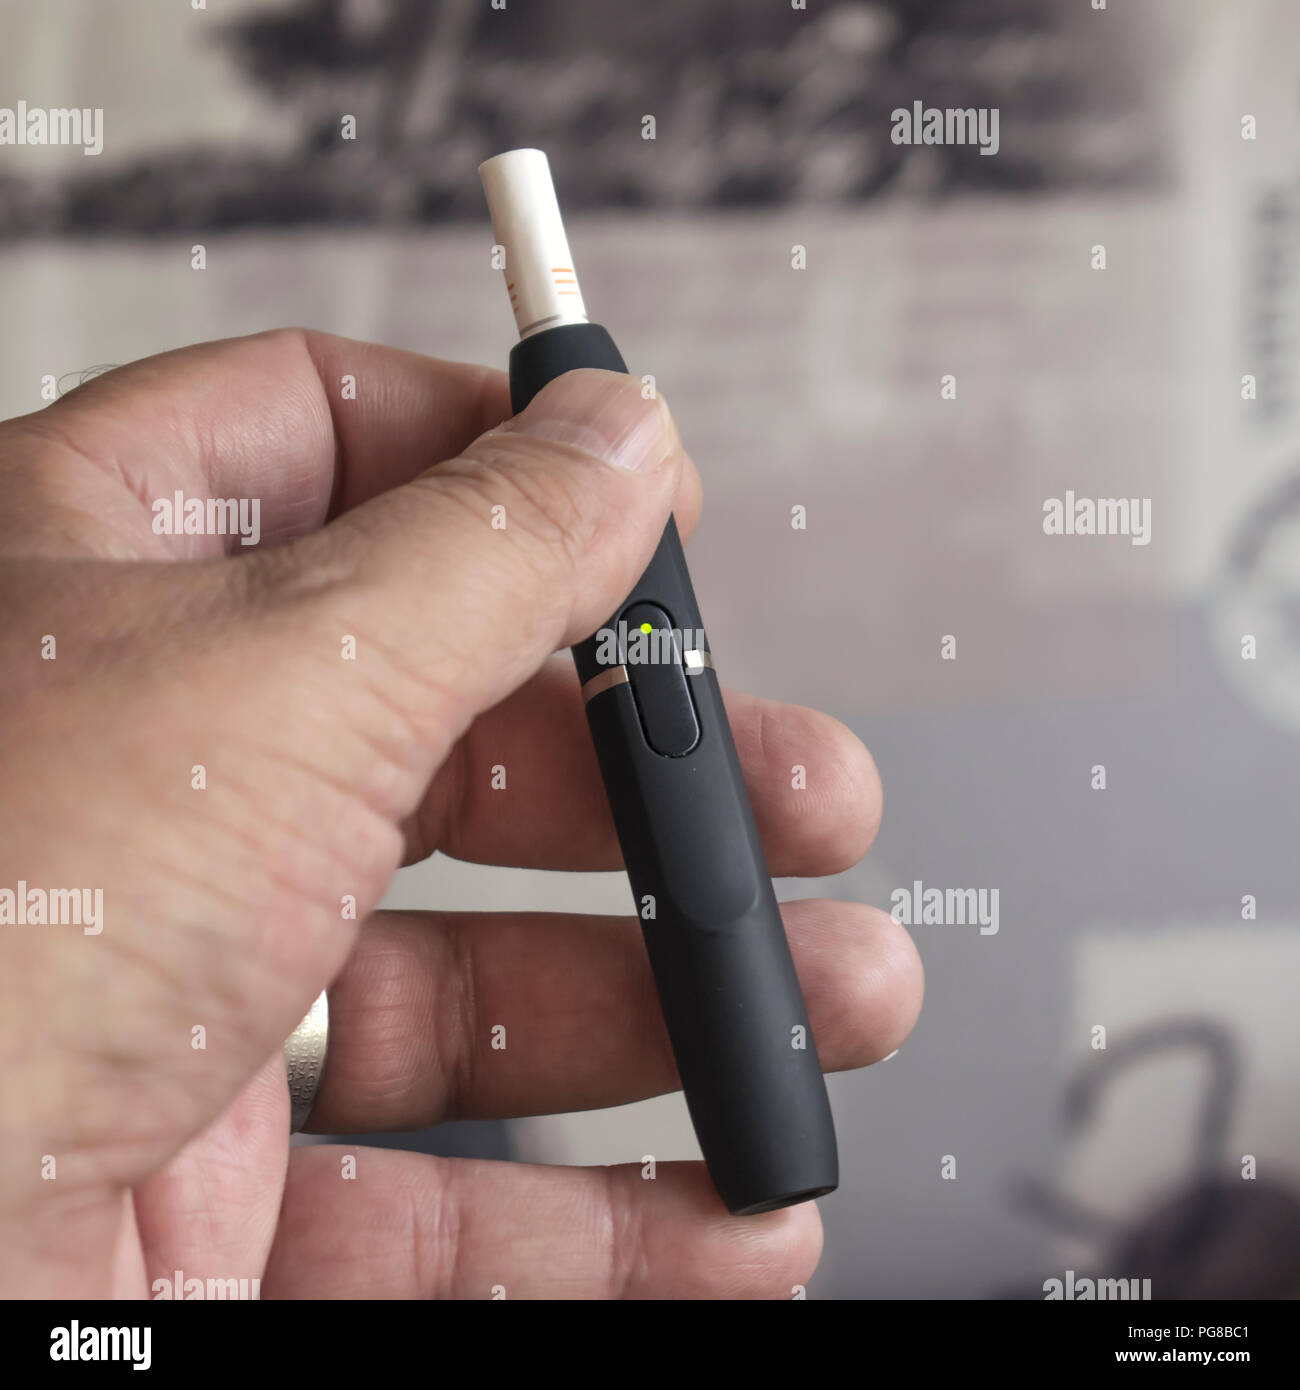 The new technology cigarette, hybrid cigarette, heatsticks, tobacco, new device Stock Photo